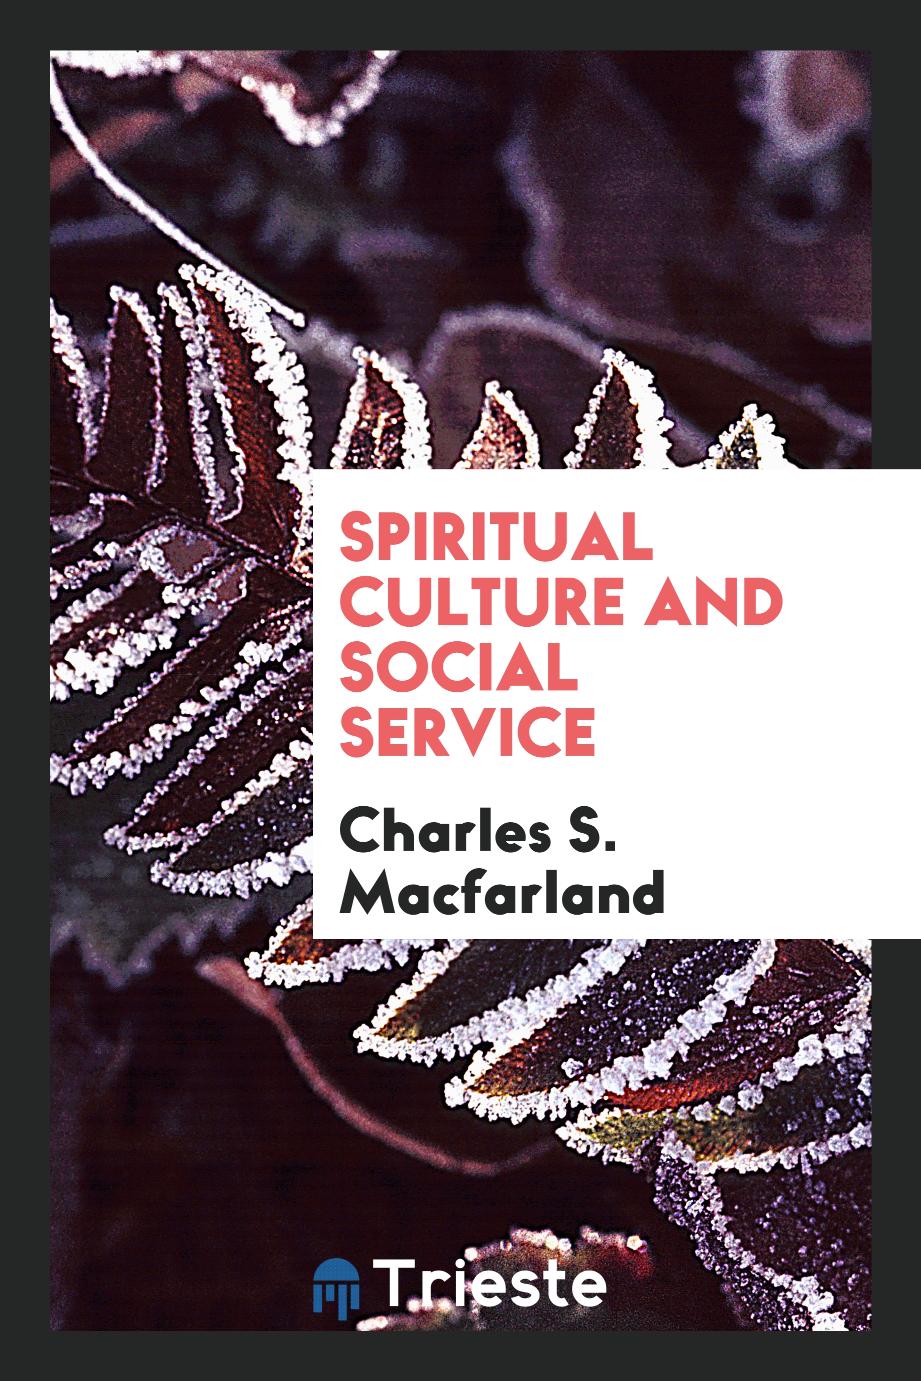 Spiritual culture and social service